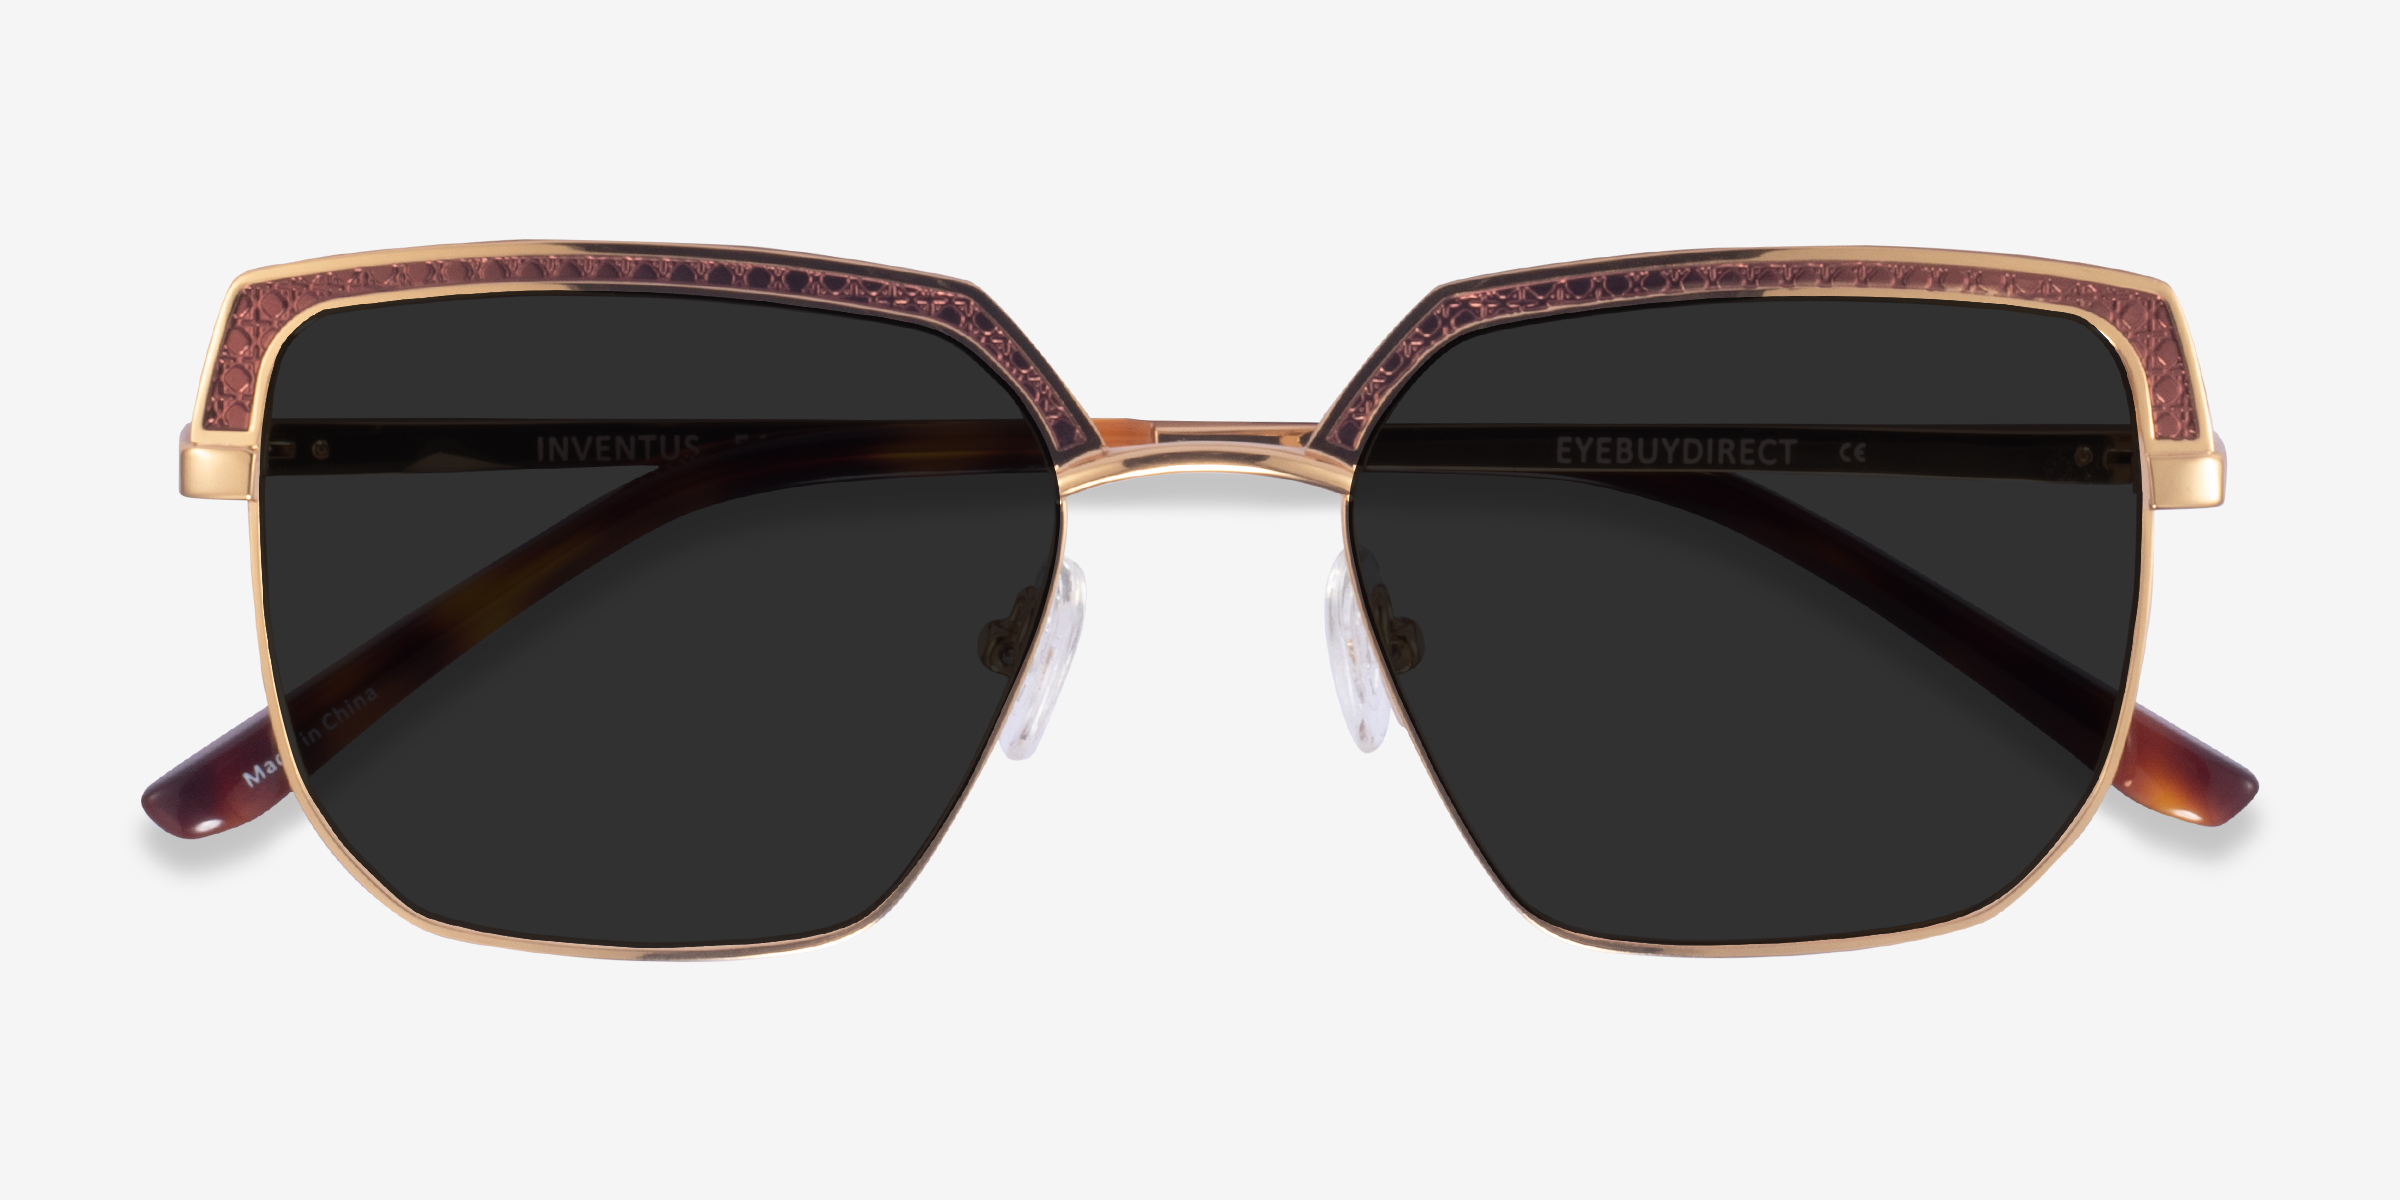 Inventus - Browline Brown Gold Frame Prescription Sunglasses | Eyebuydirect